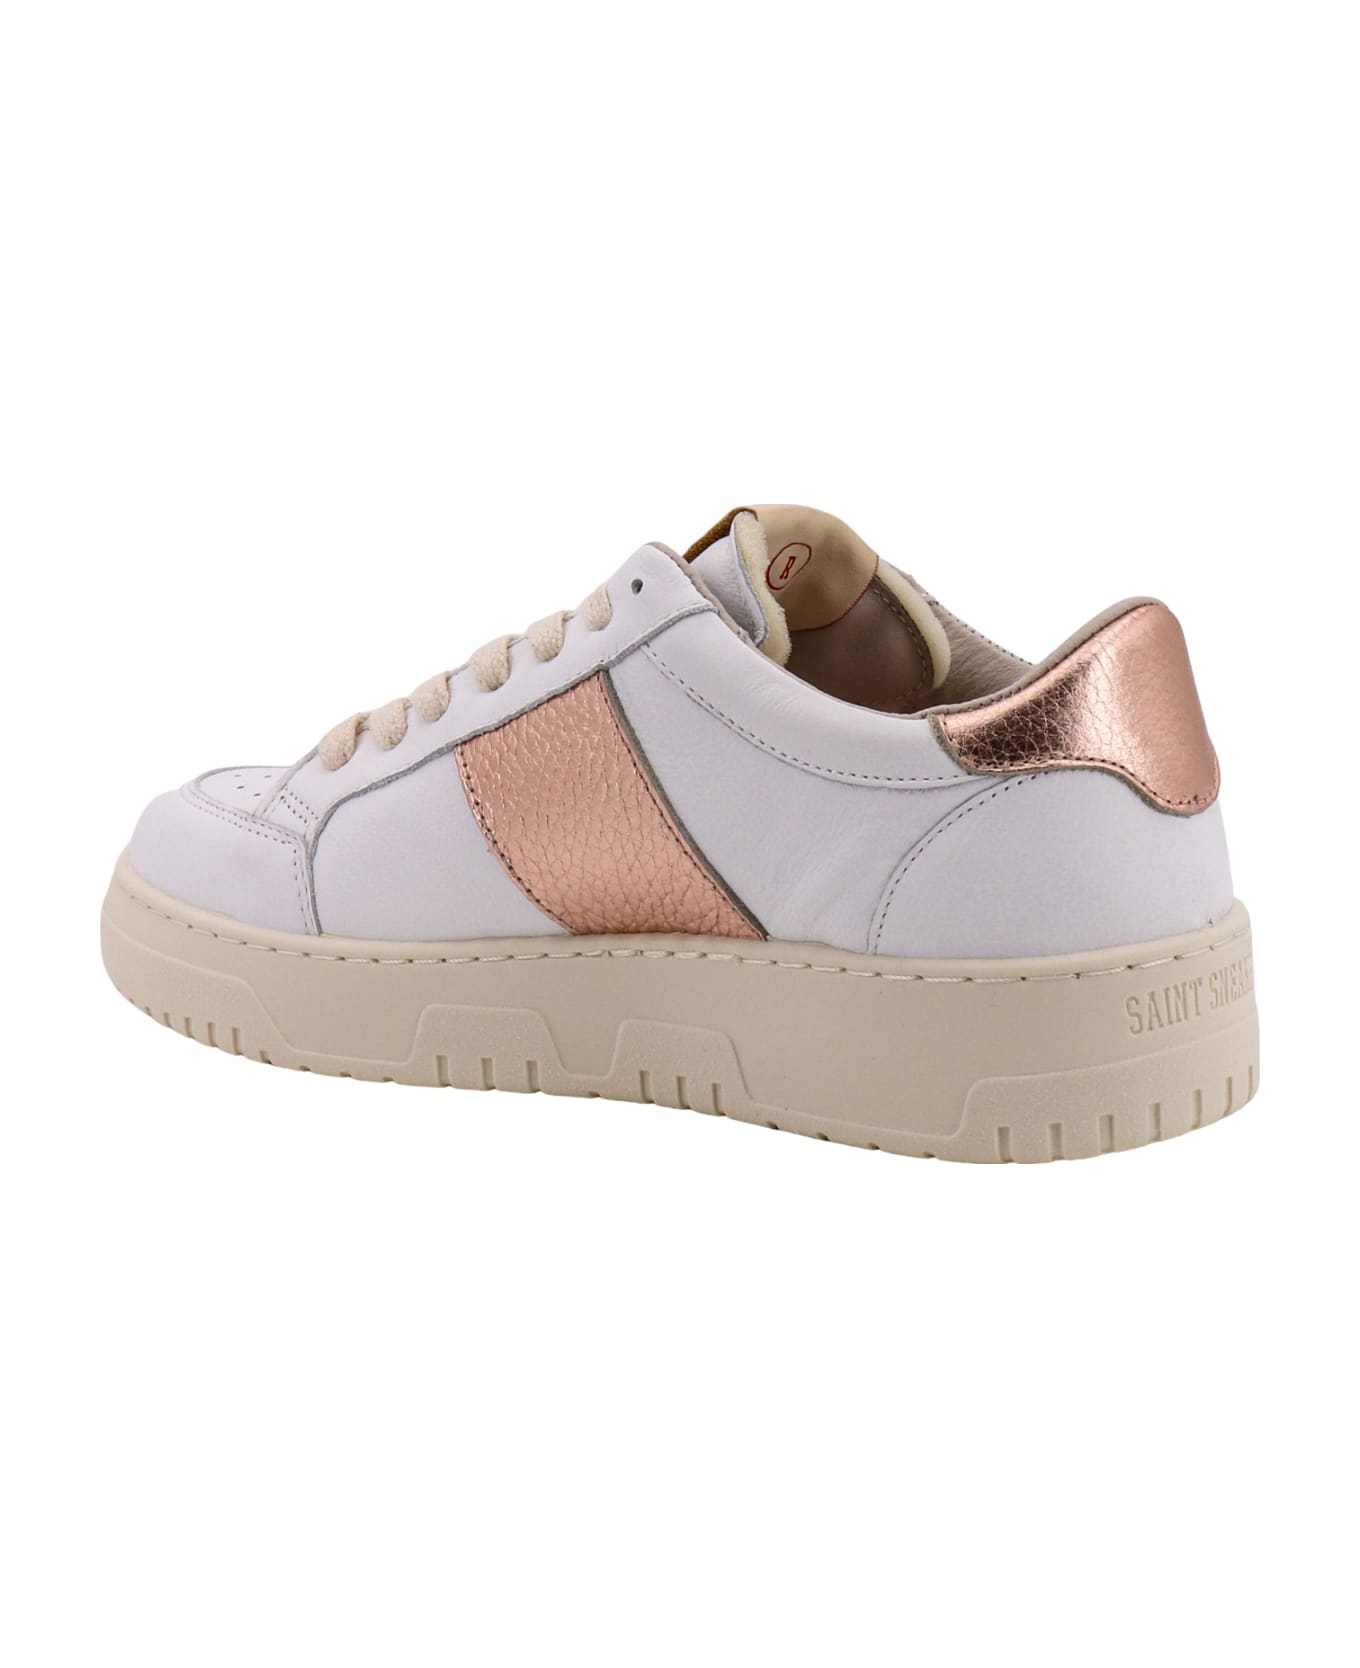 Saint Sneakers Sneakers - White/bronze